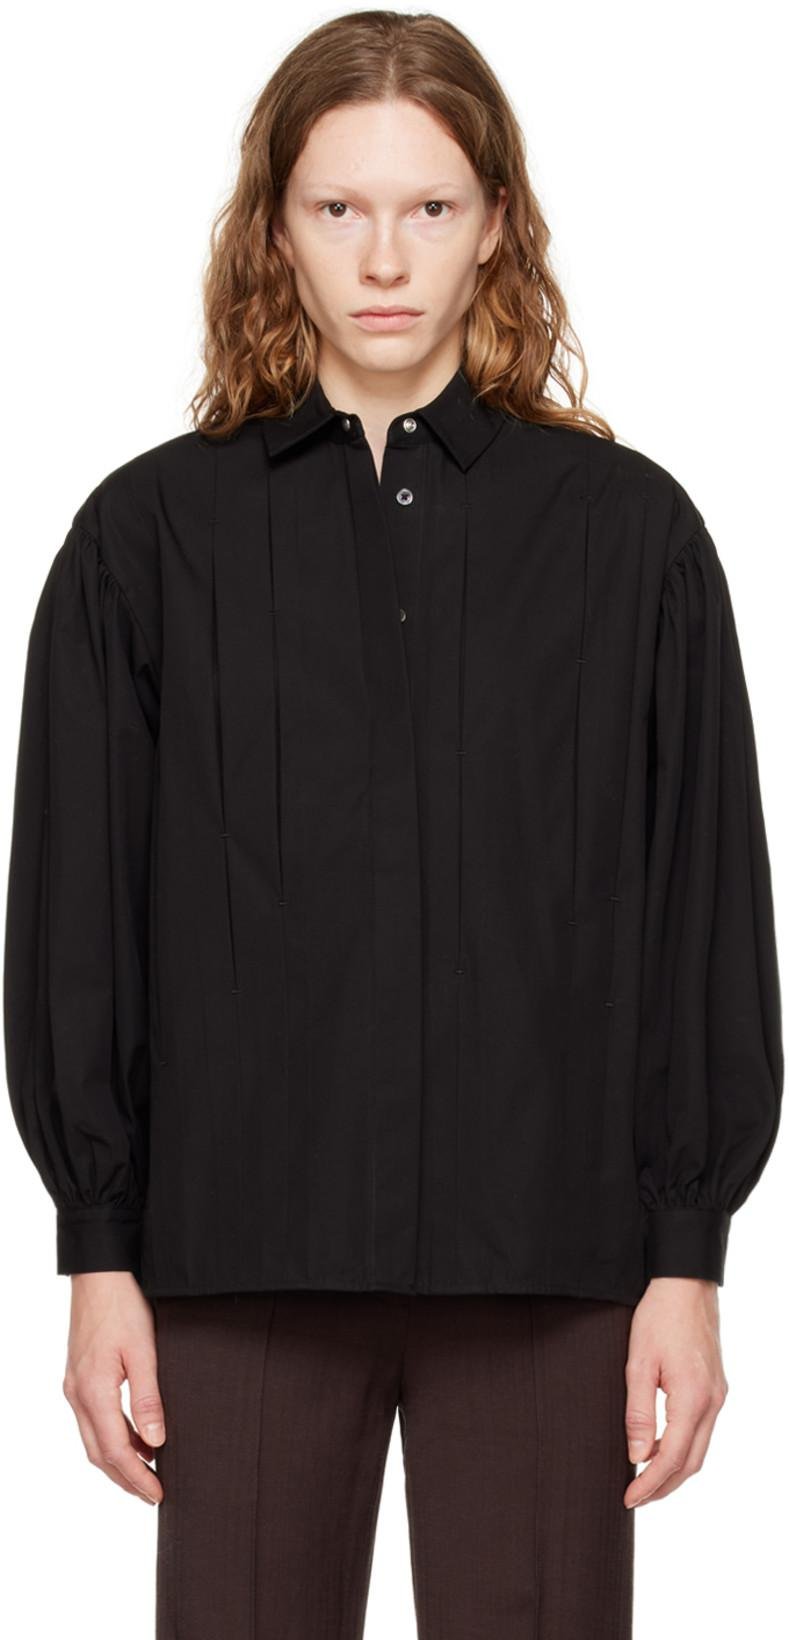 Black Boxy Shirt by CO